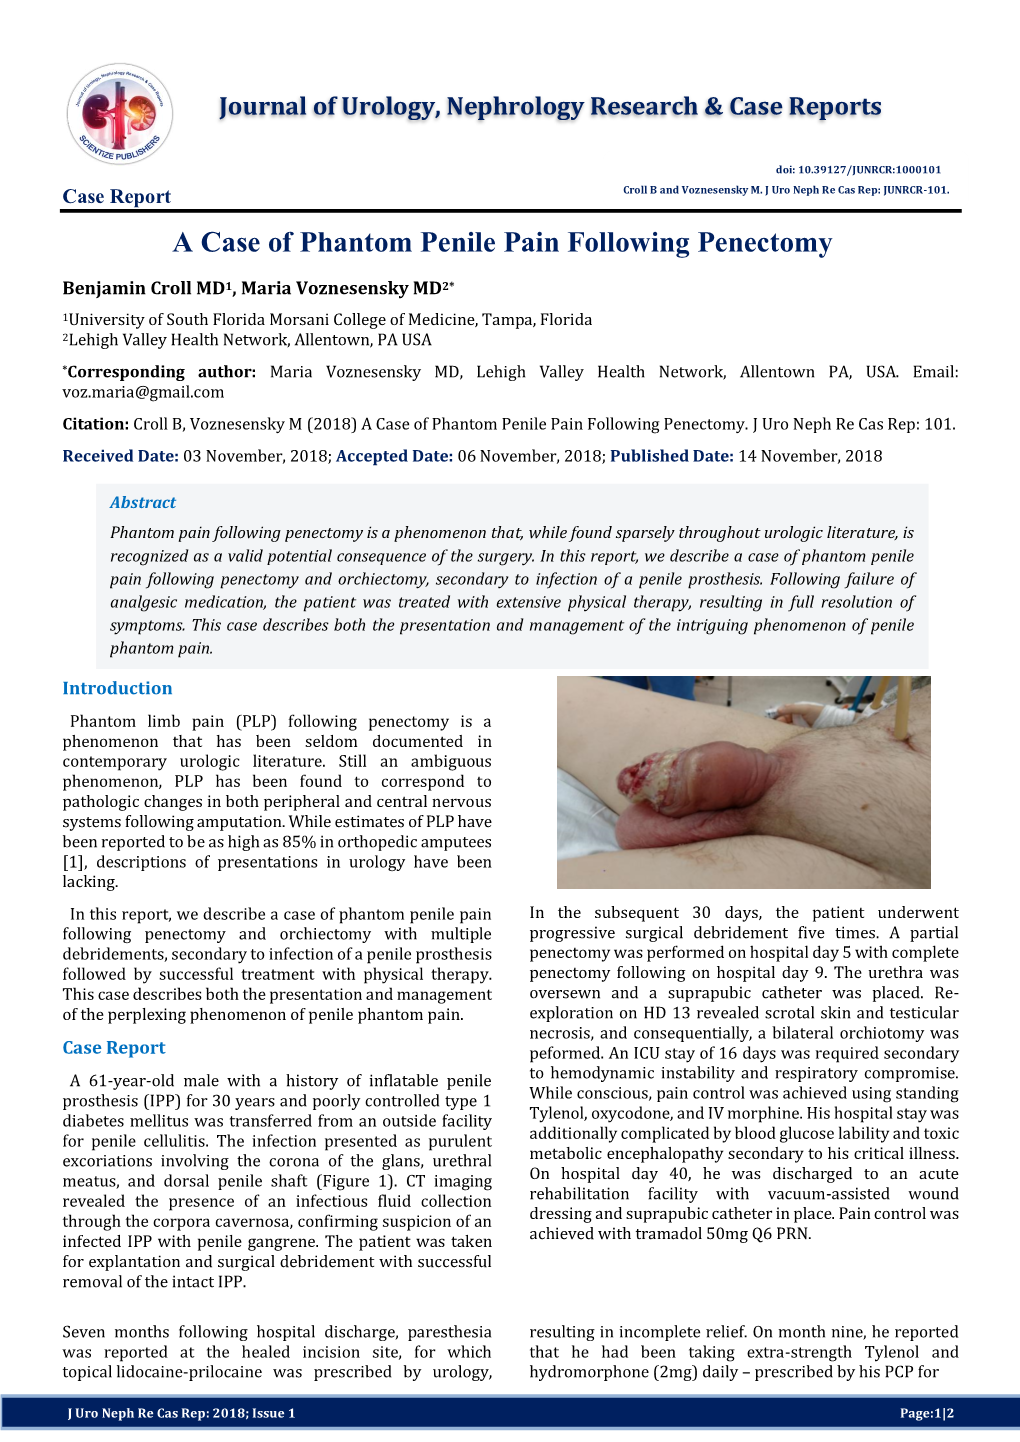 A Case of Phantom Penile Pain Following Penectomy